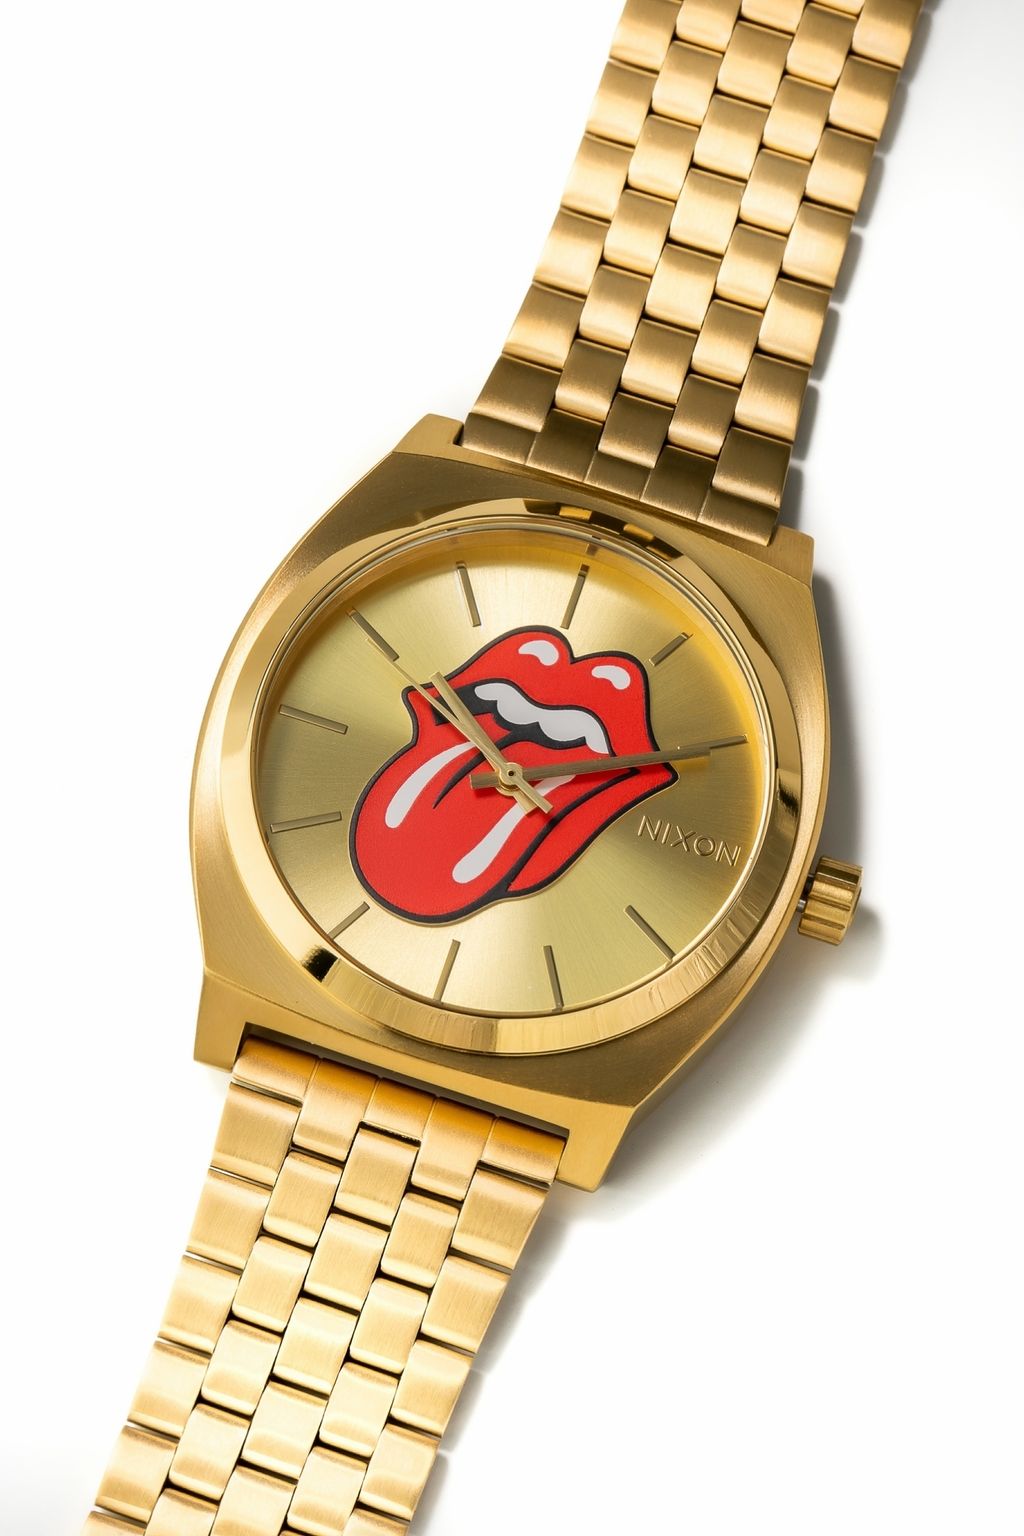 LINE_ALBUM_Rolling Stones 聯名款_220428_18.jpg